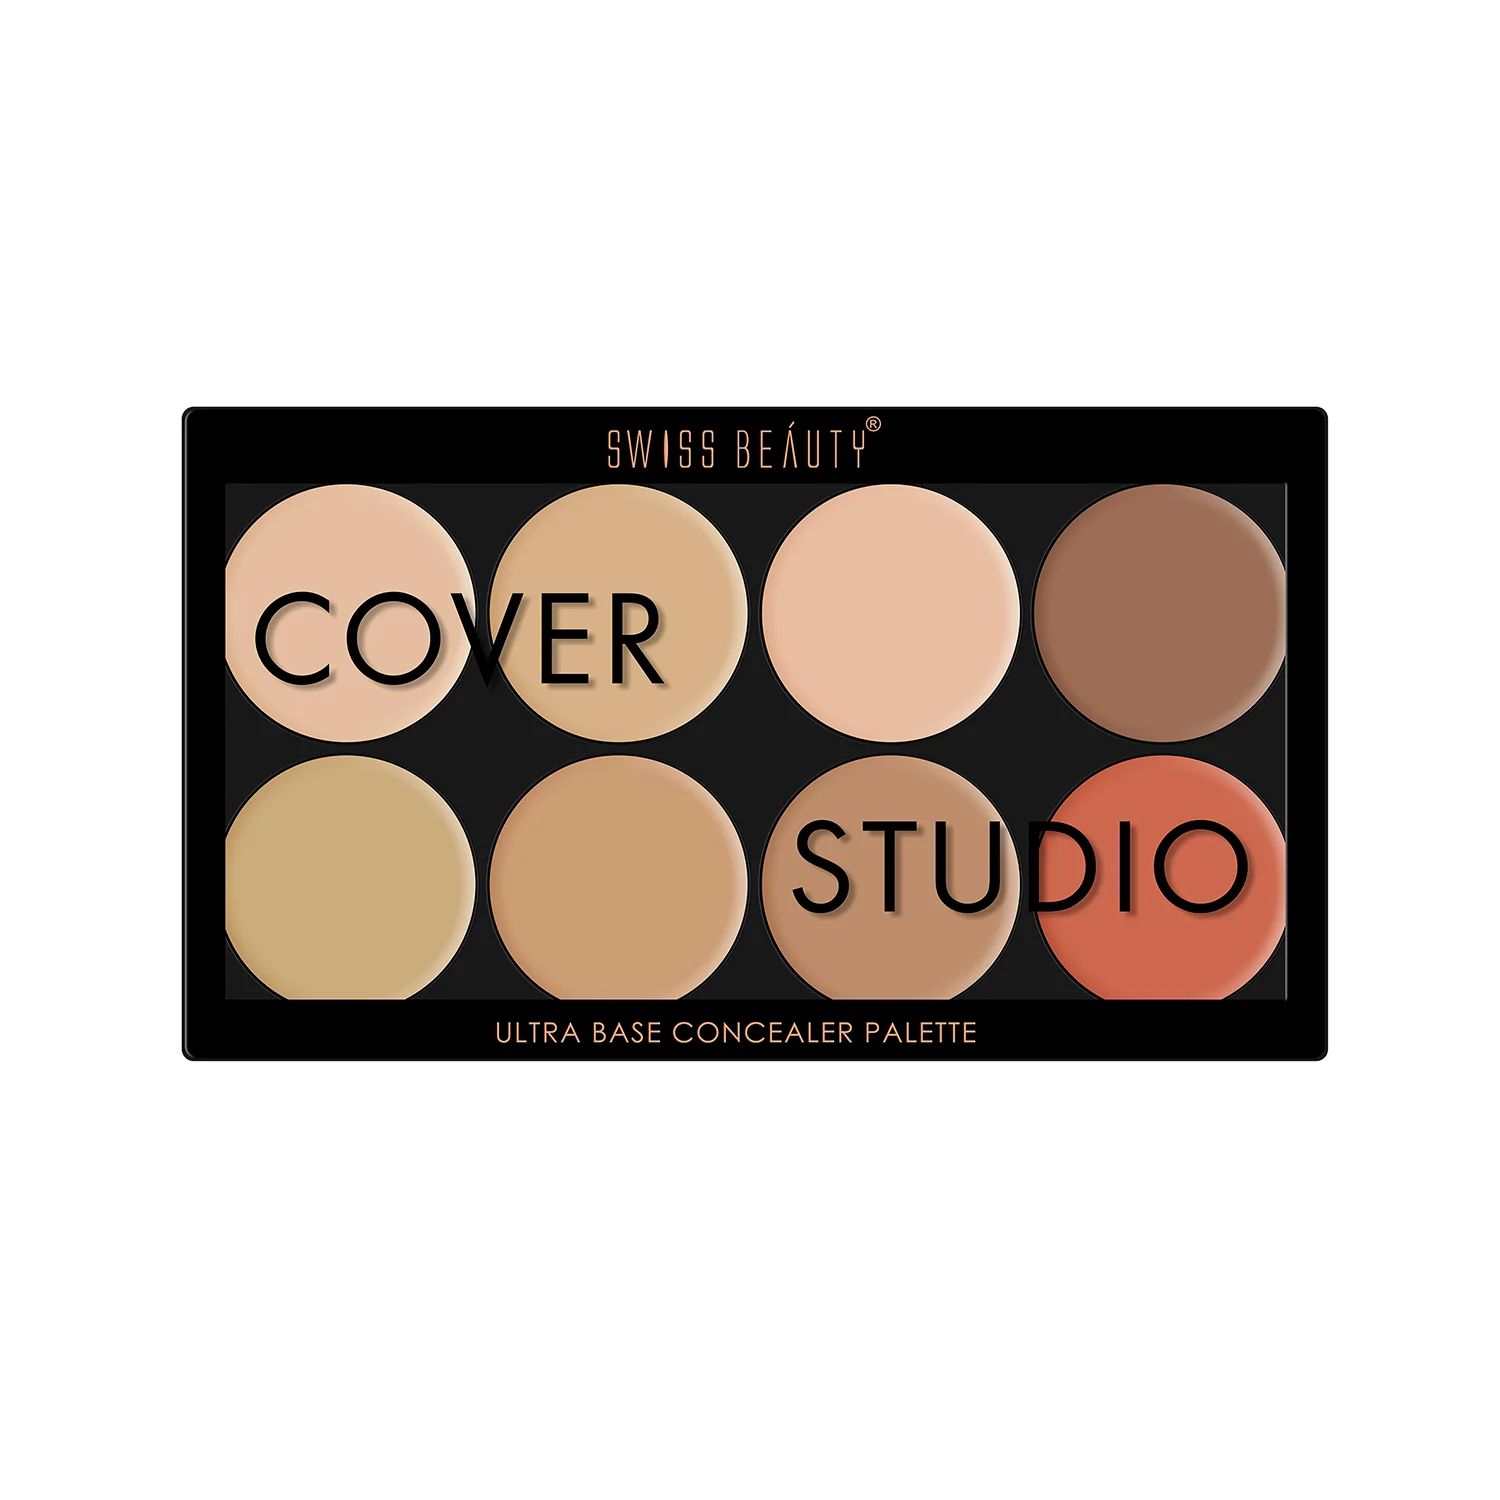 Swiss beauty cover studio concealer palette